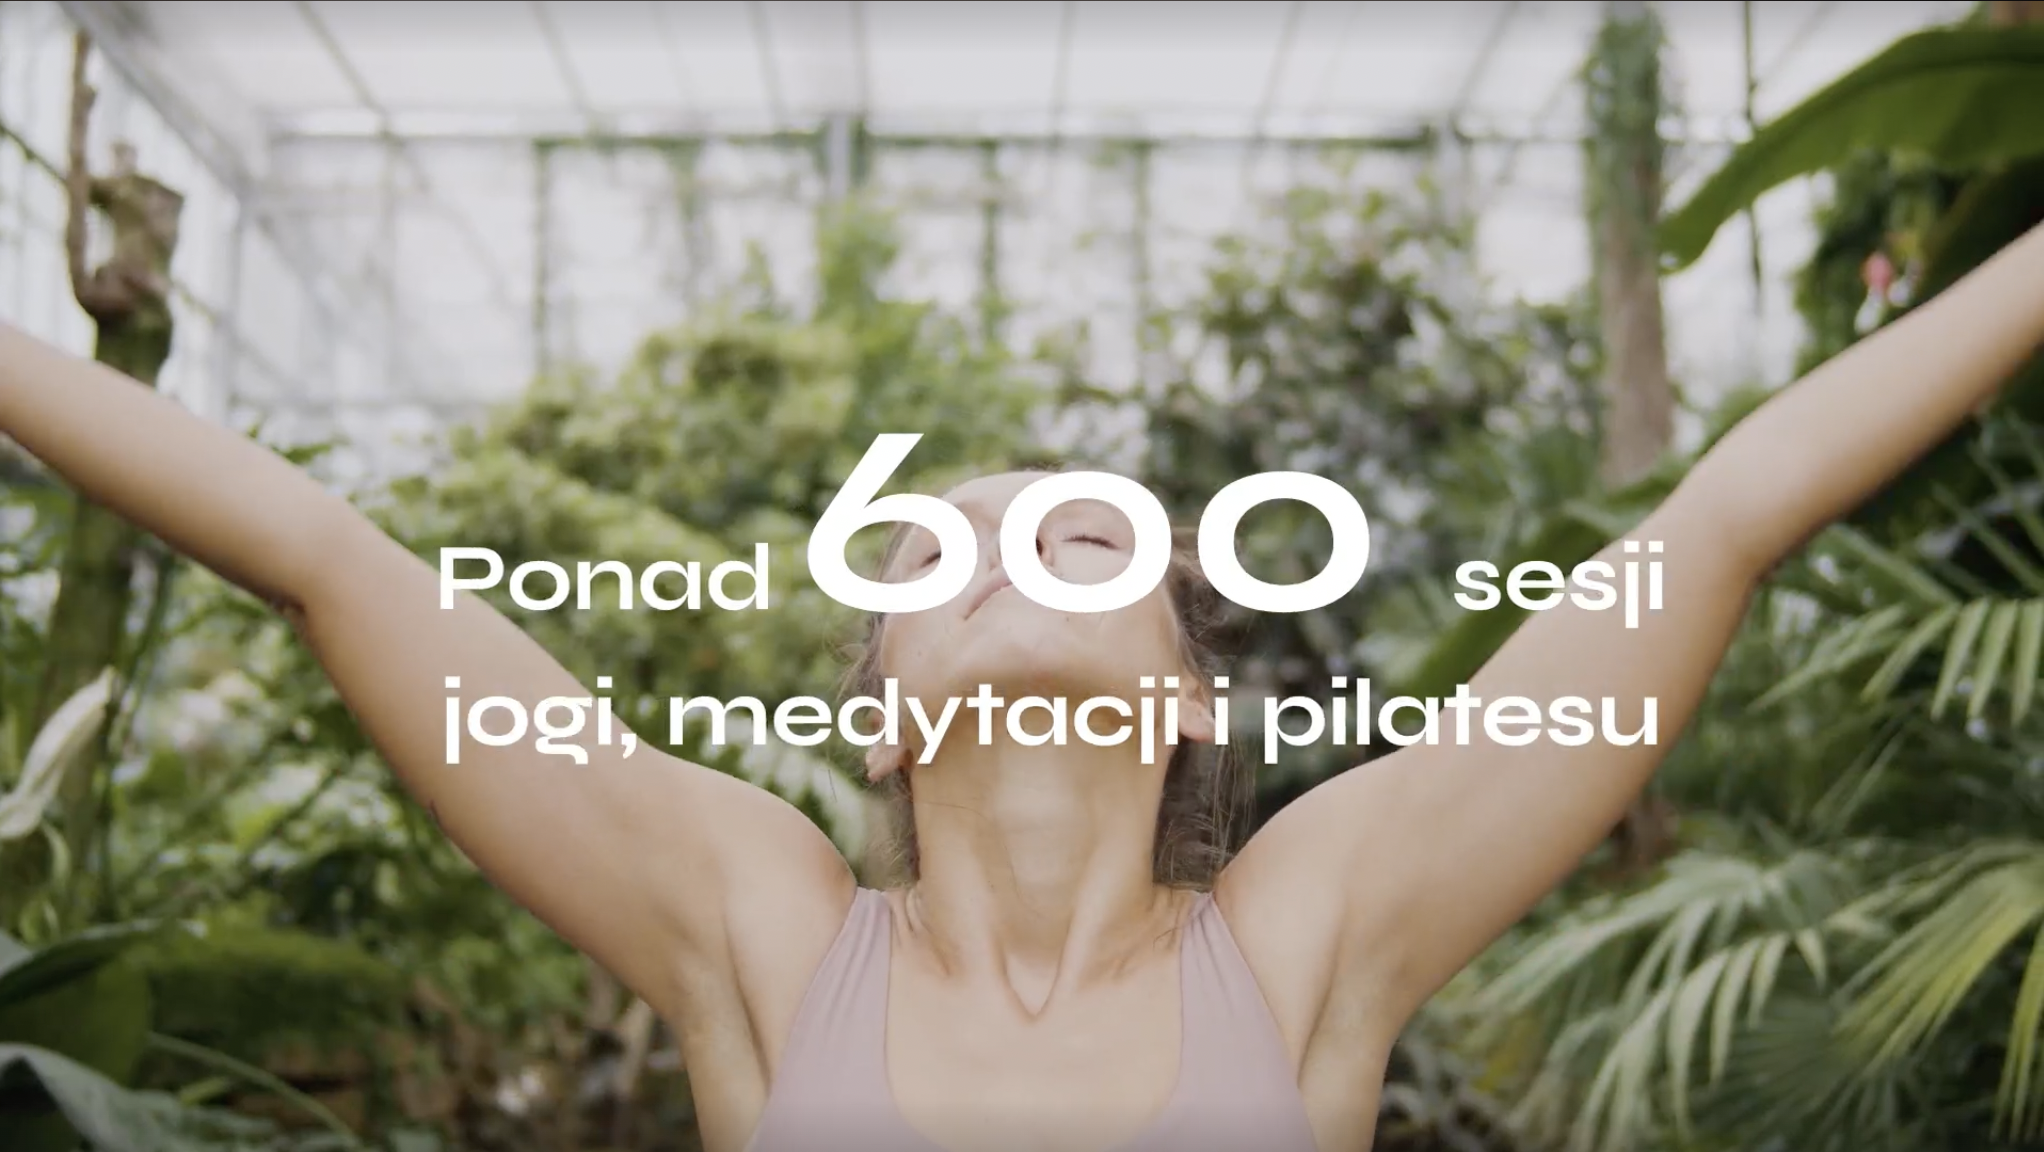 PortalYogi studio joga medytacja pilates